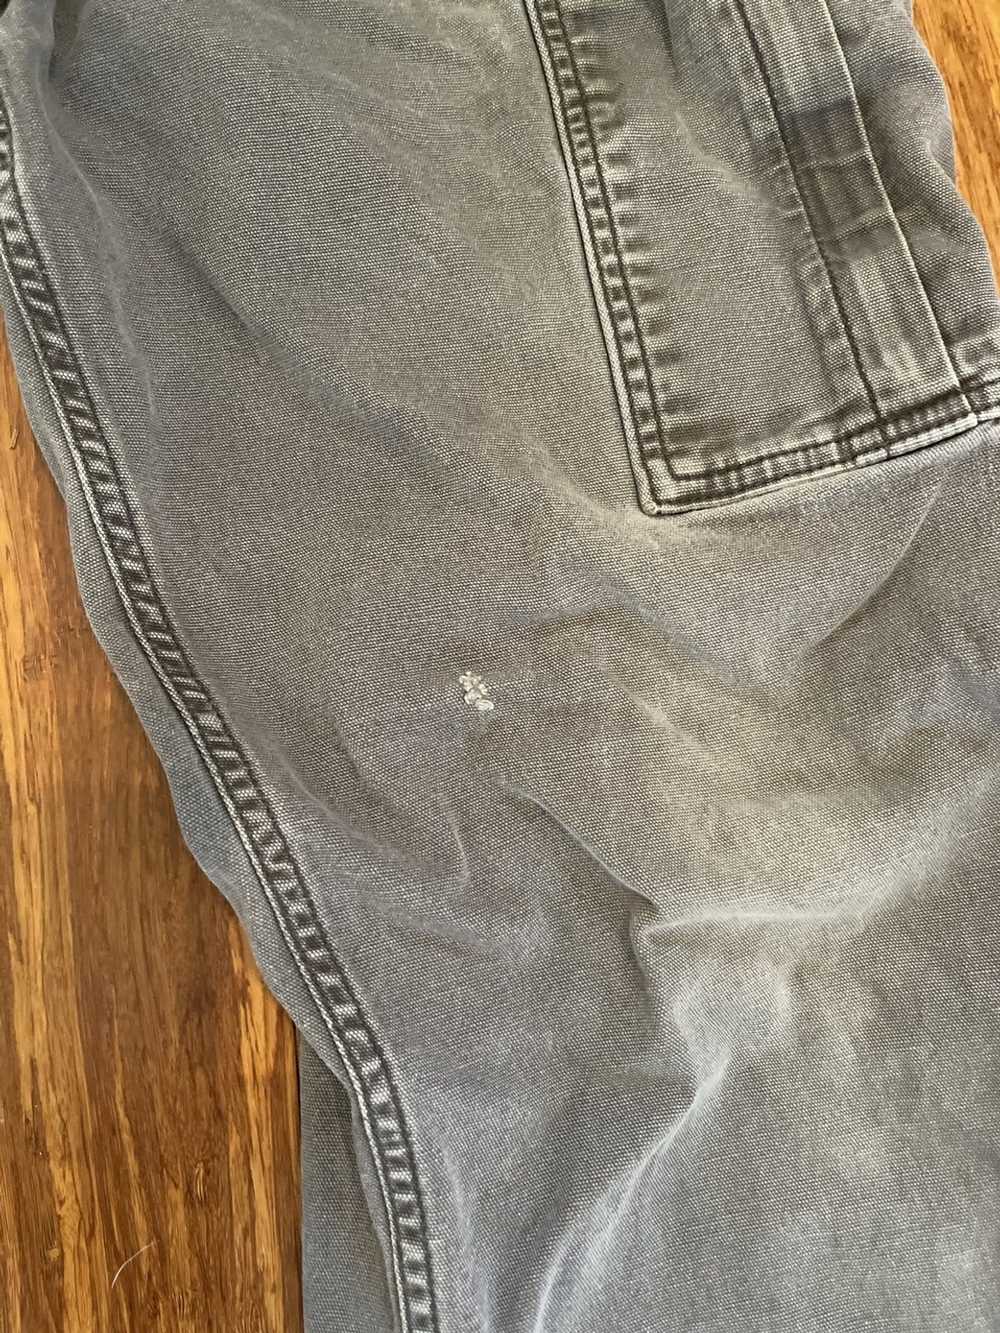 Carhartt Distressed Grey Carhartt Cargo Pants - image 3